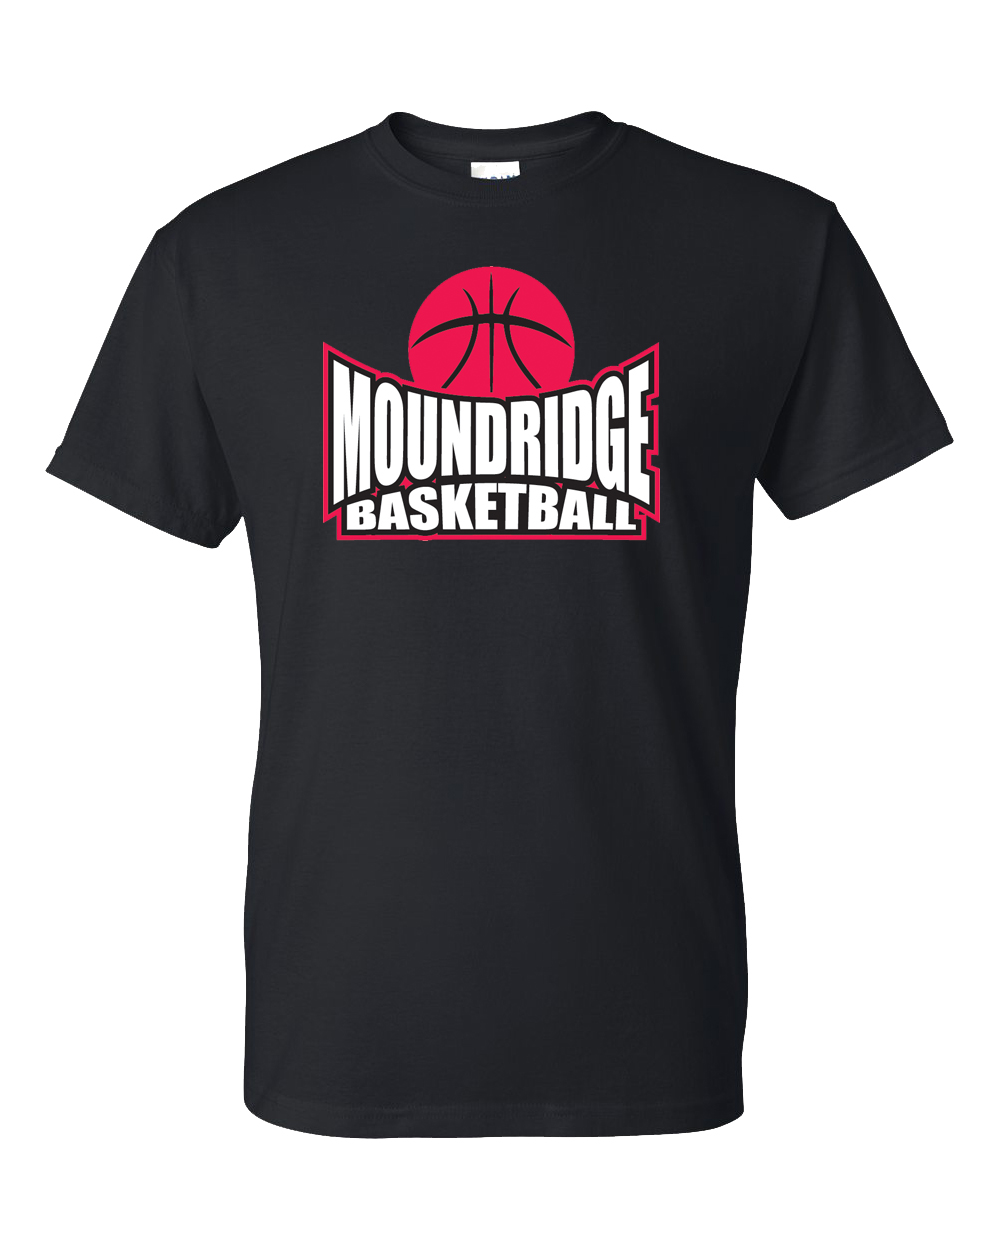 Moundridge Basketball T-Shirt - Atomic